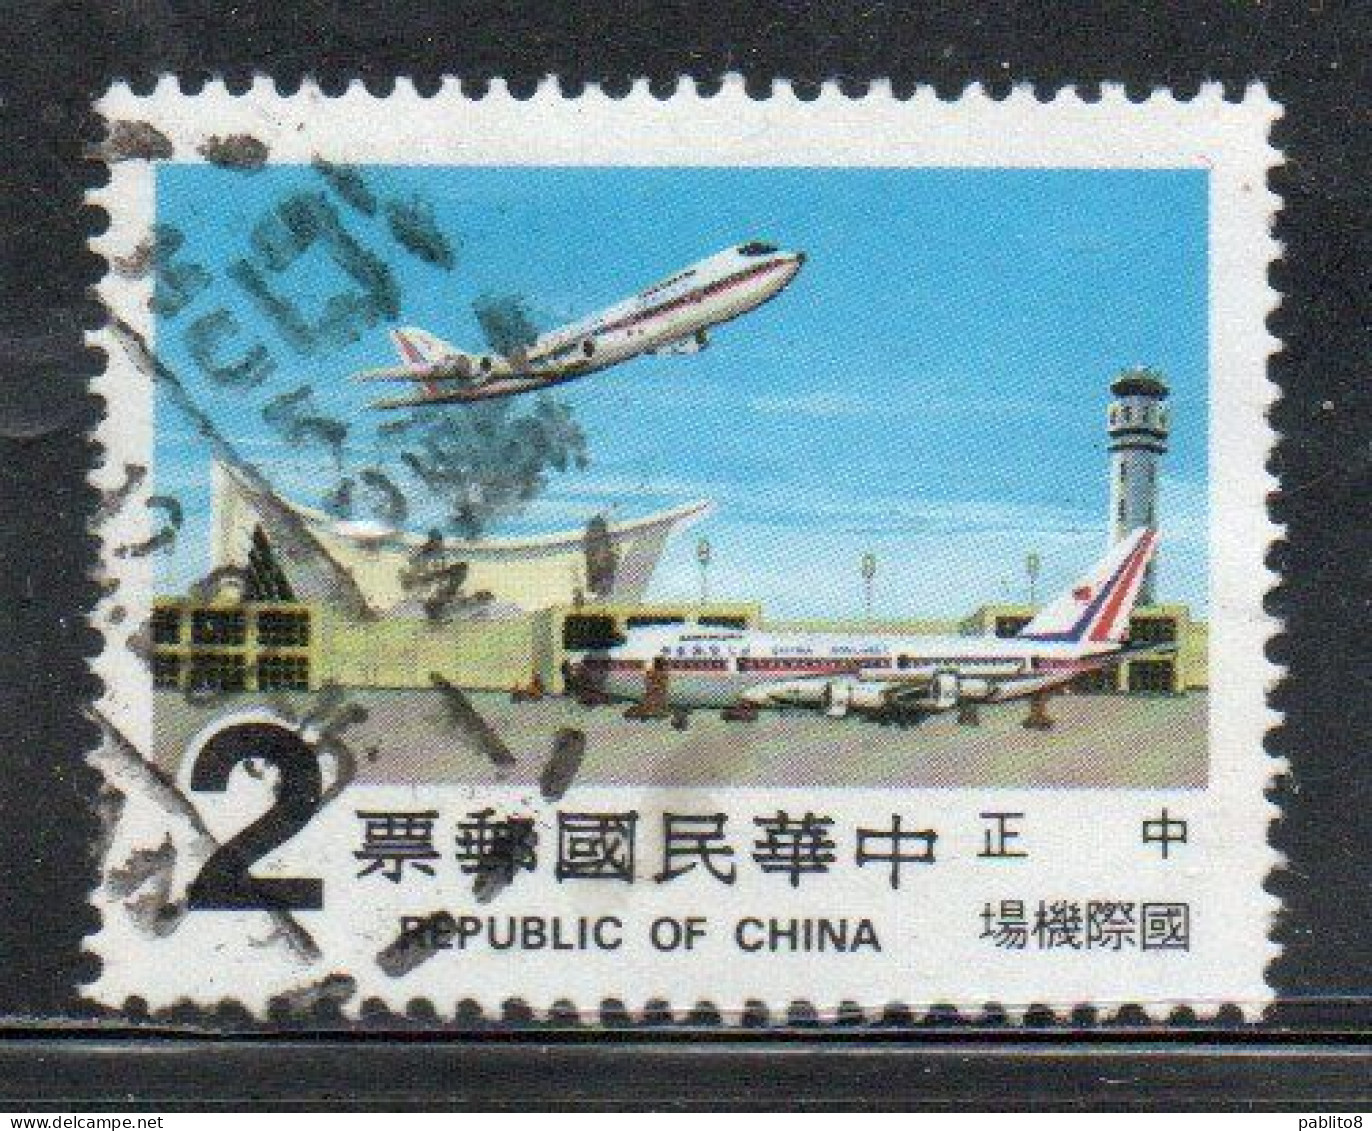 CHINA REPUBLIC CINA TAIWAN FORMOSA 1984 AIRLINES WORLD-WIDE SERVICE INAUGURATION JET CIRCLING GLOBE 2$ USED - Usados